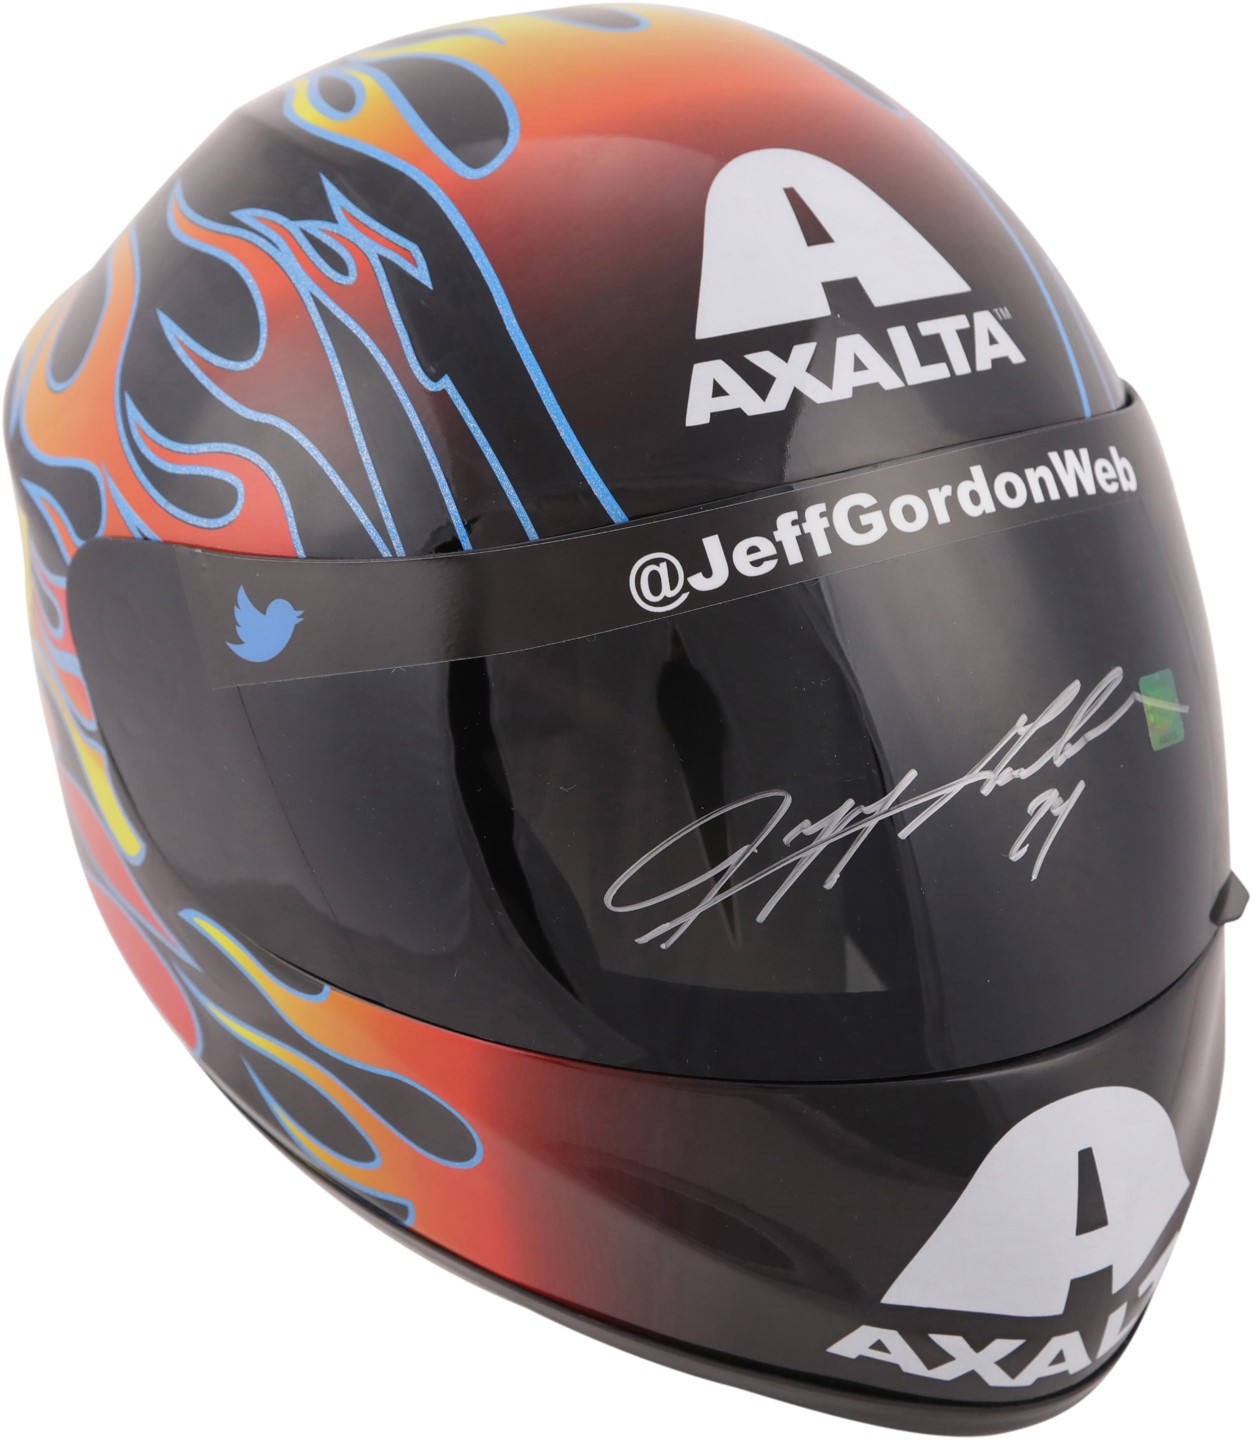 Olympics and All Sports - Jeff Gordon Signed Helmet